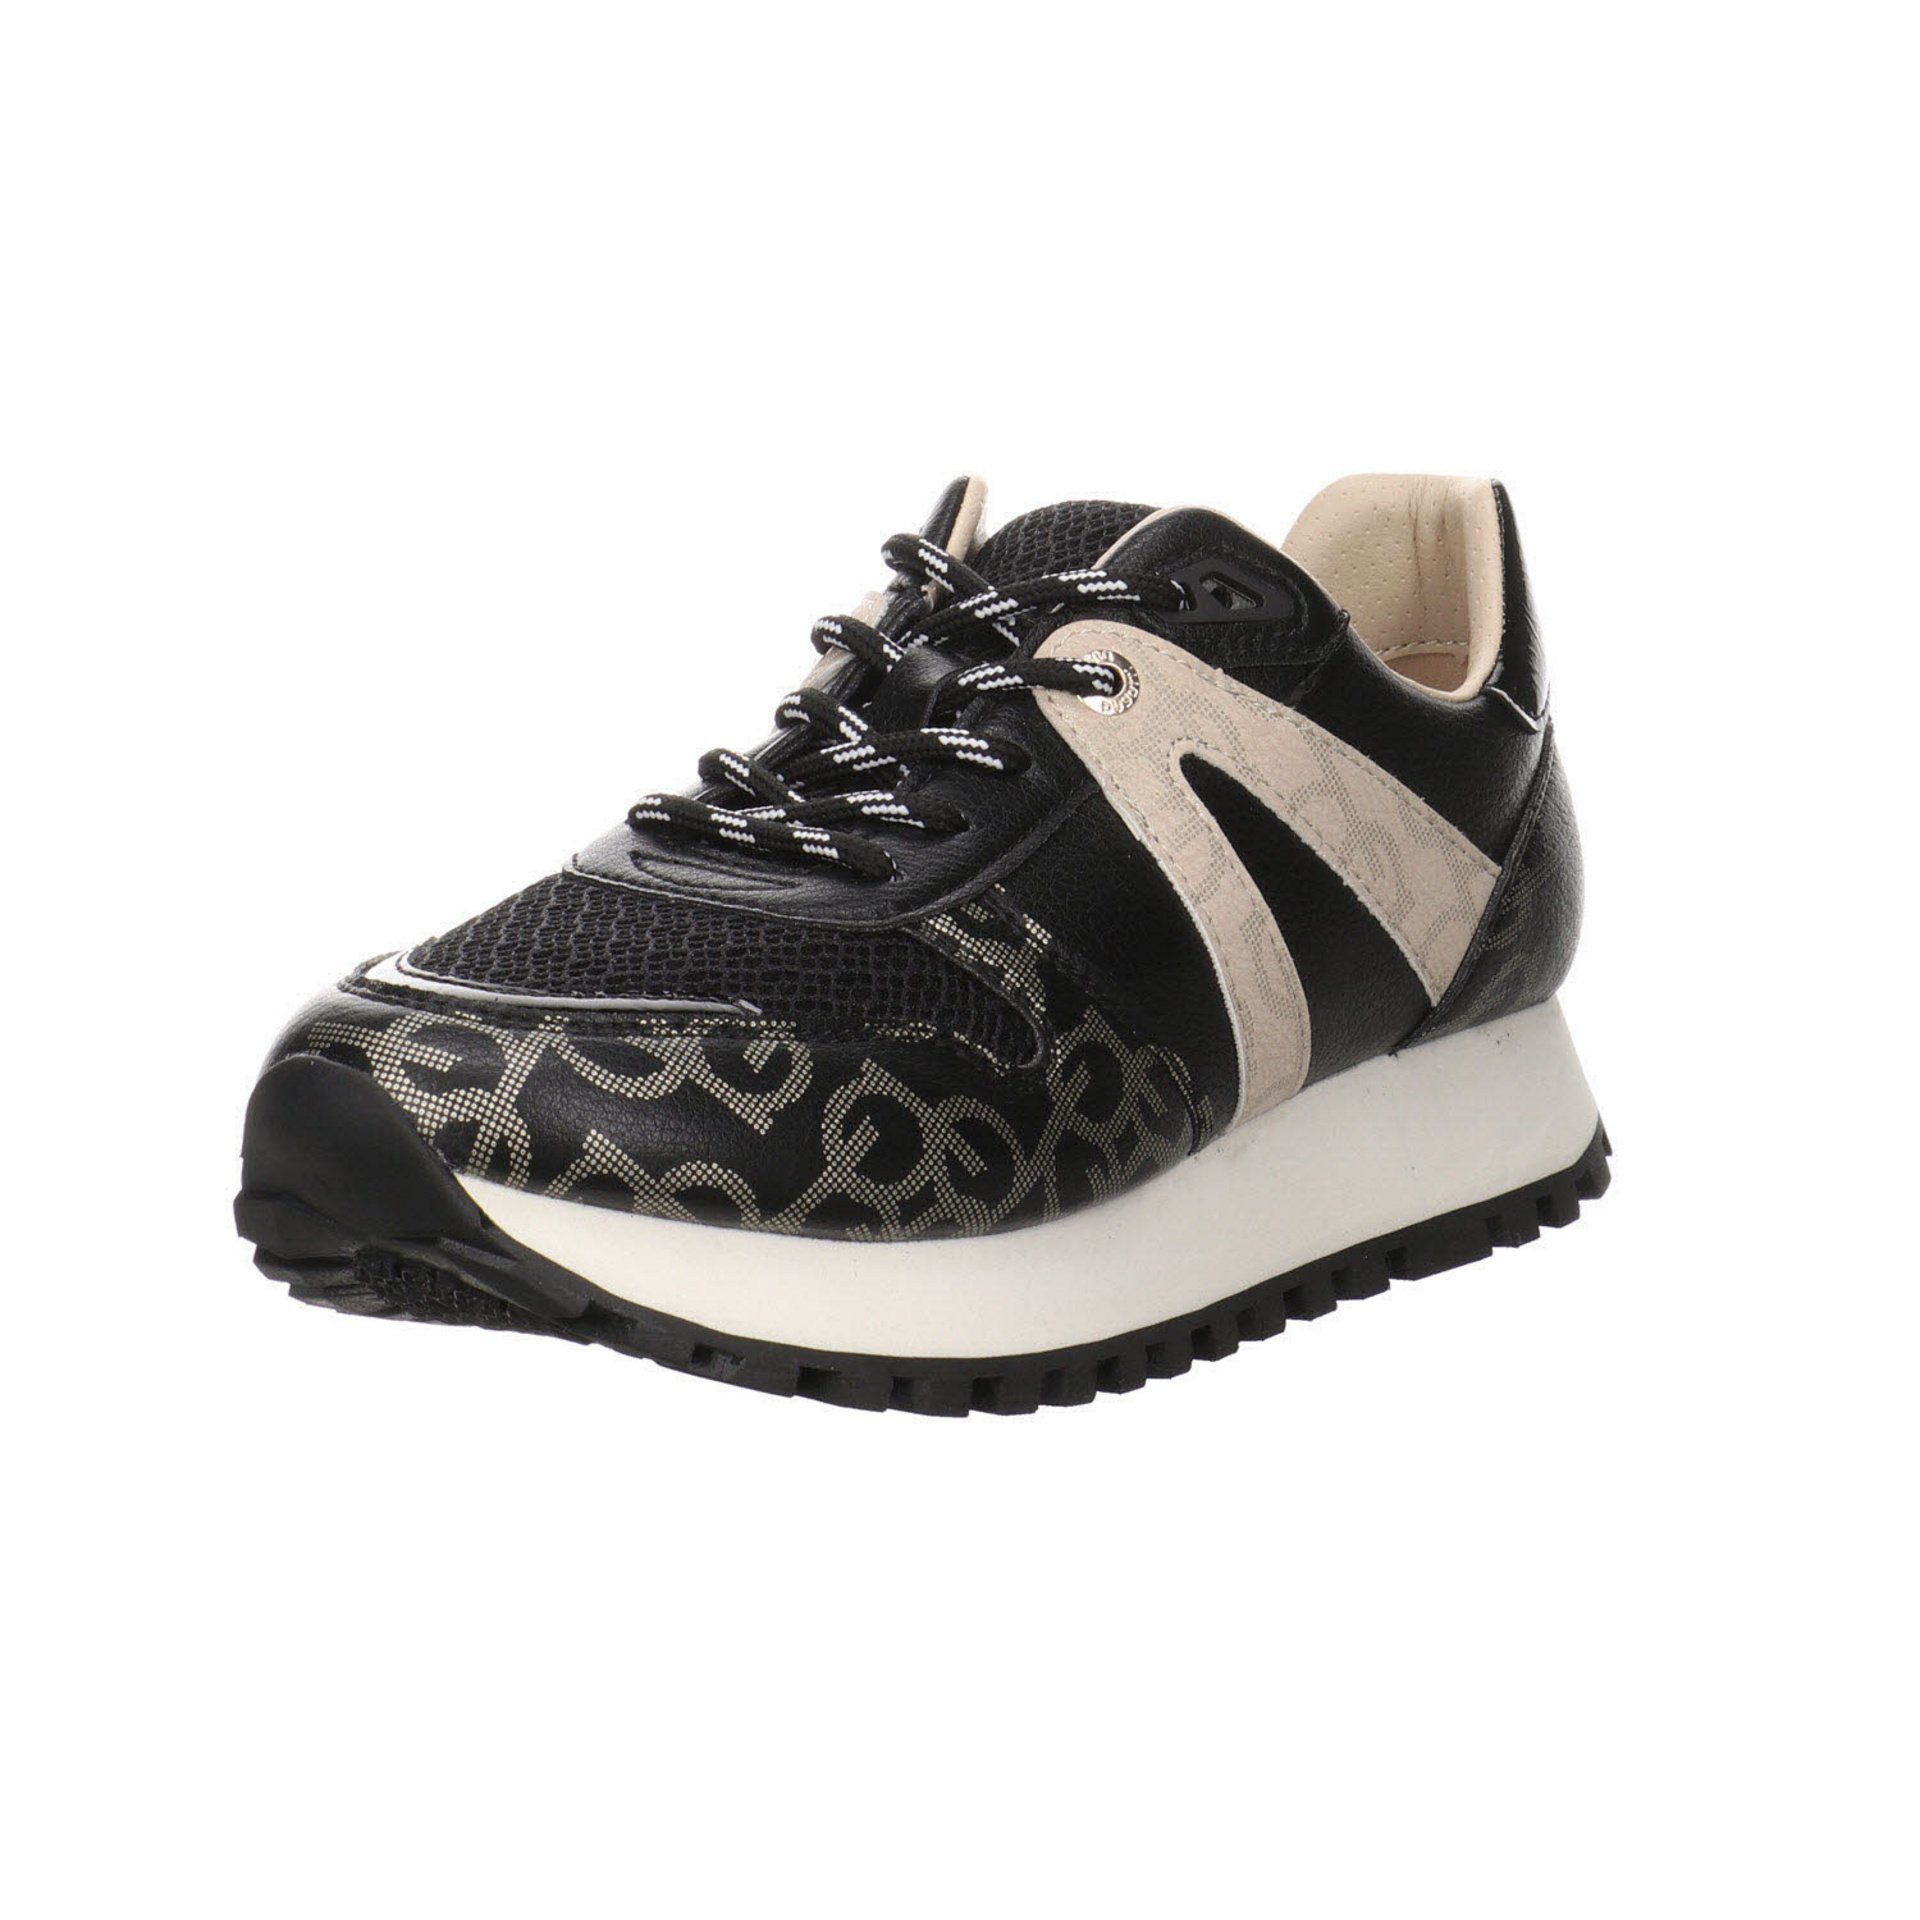 Schnürschuh black Damen Schuhe Leder-/Textilkombination beige bugatti Sneaker / Sneaker Siena